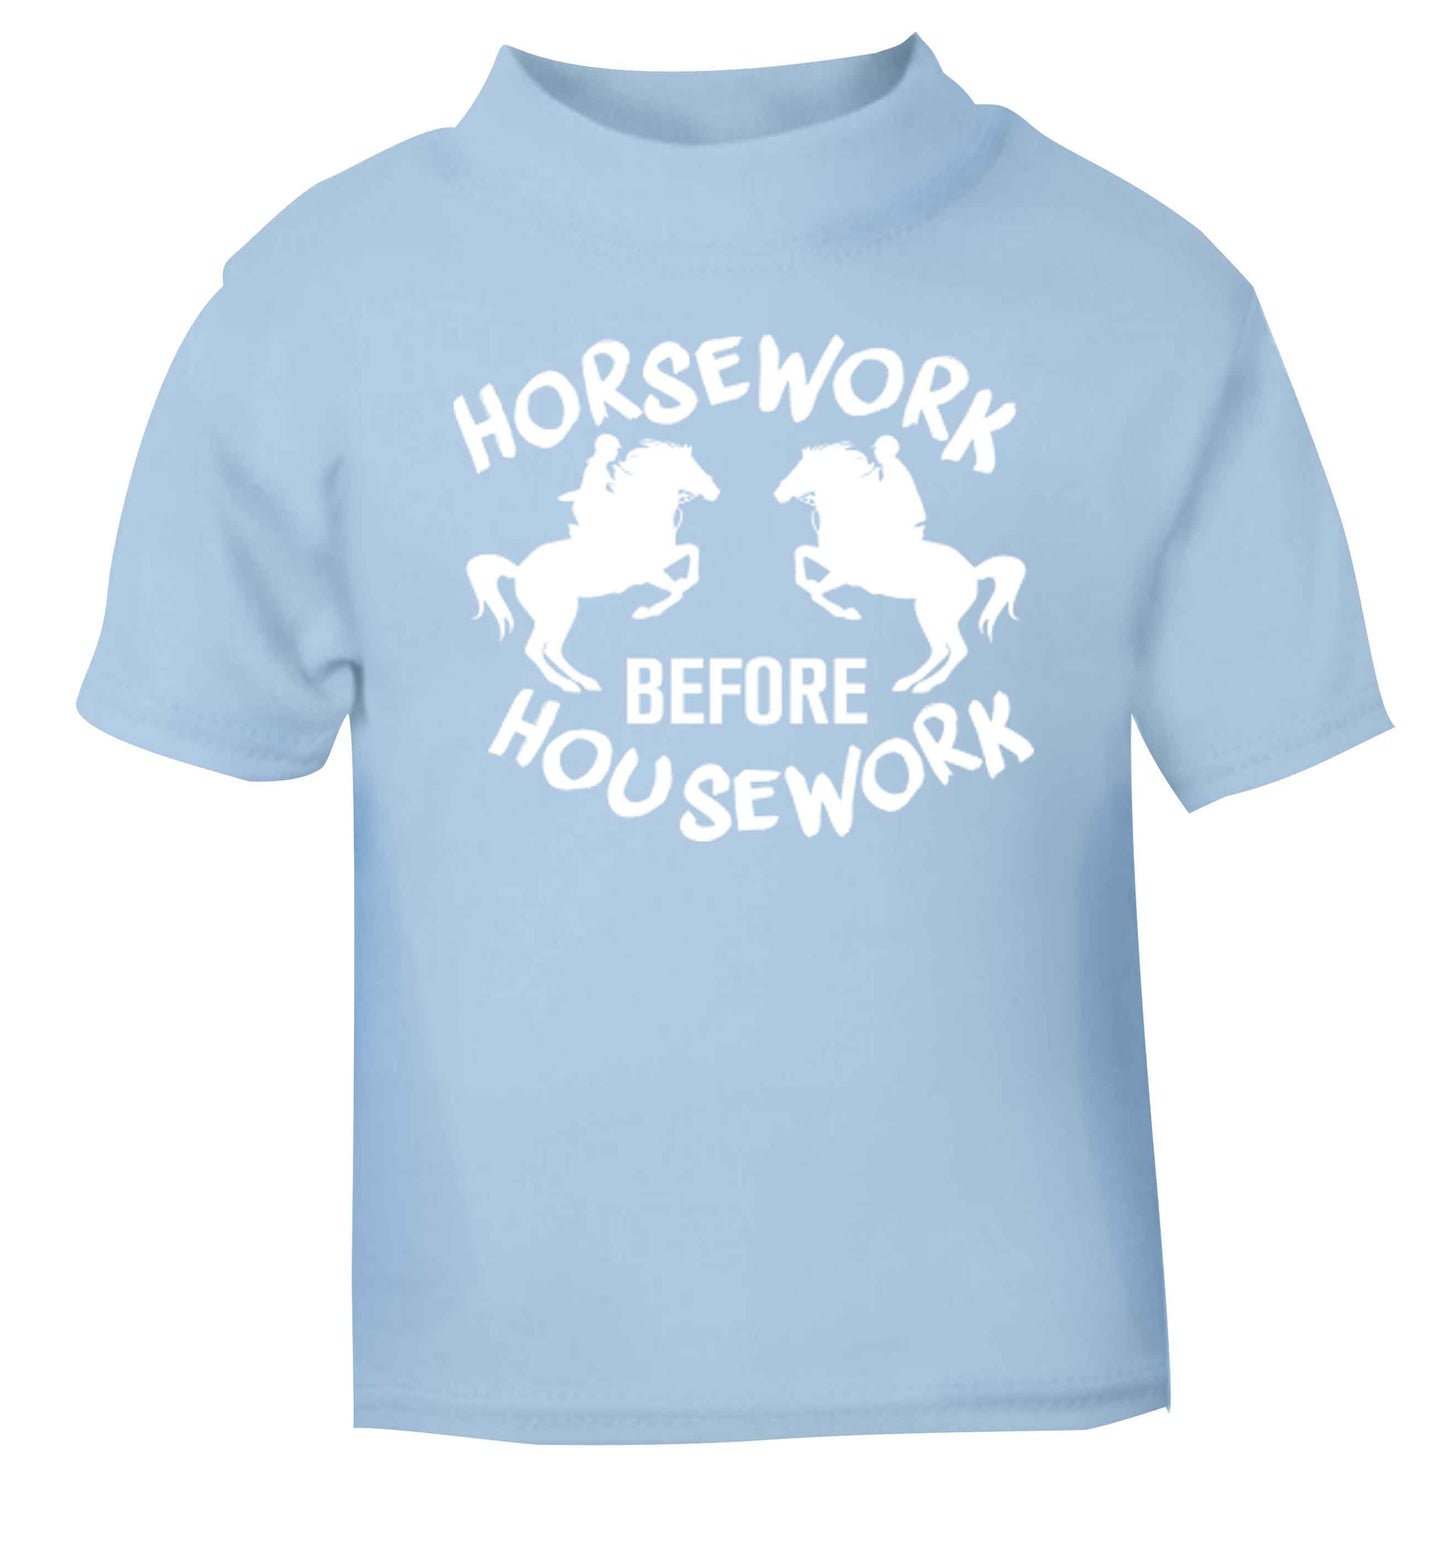 Horsework before housework light blue baby toddler Tshirt 2 Years